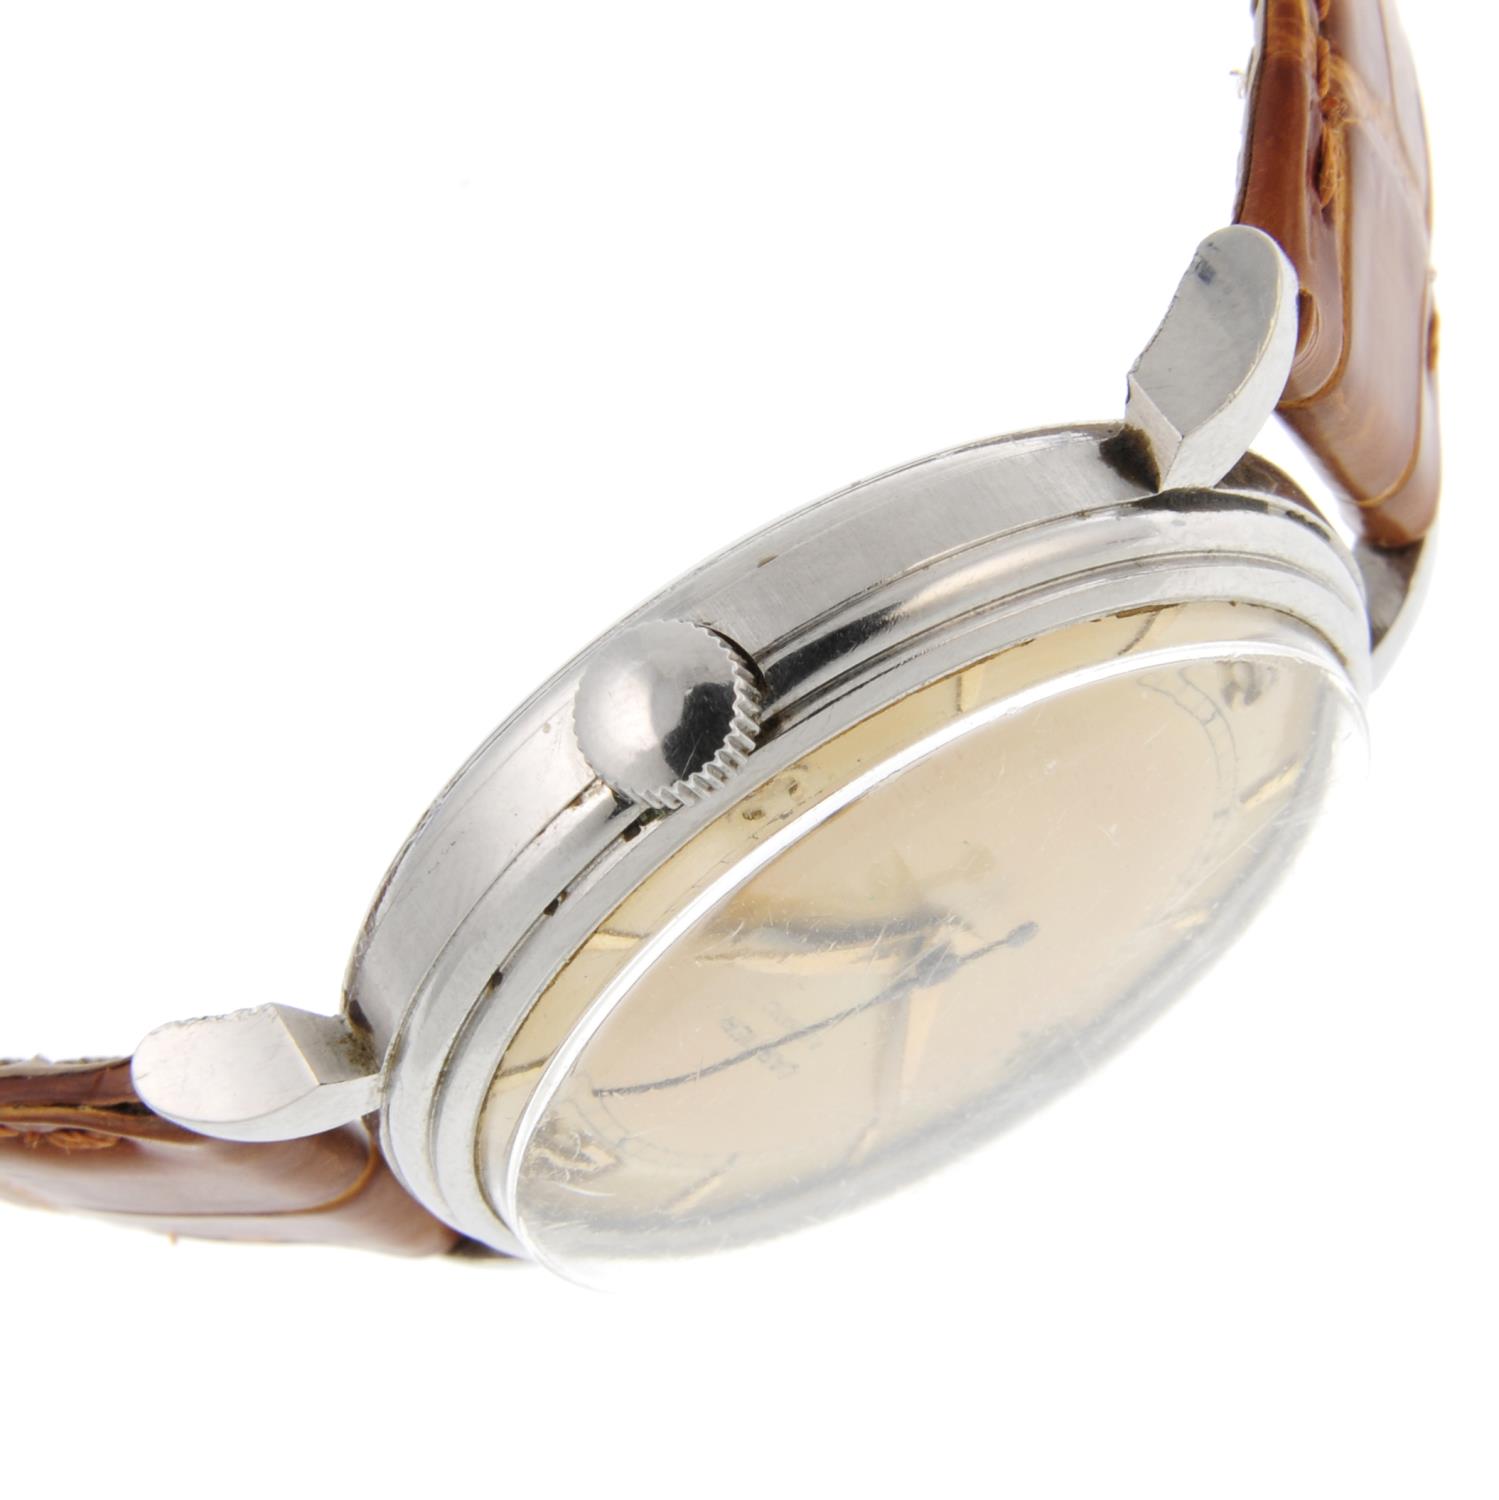 CARTIER - a gentleman's wrist watch. - Image 5 of 5